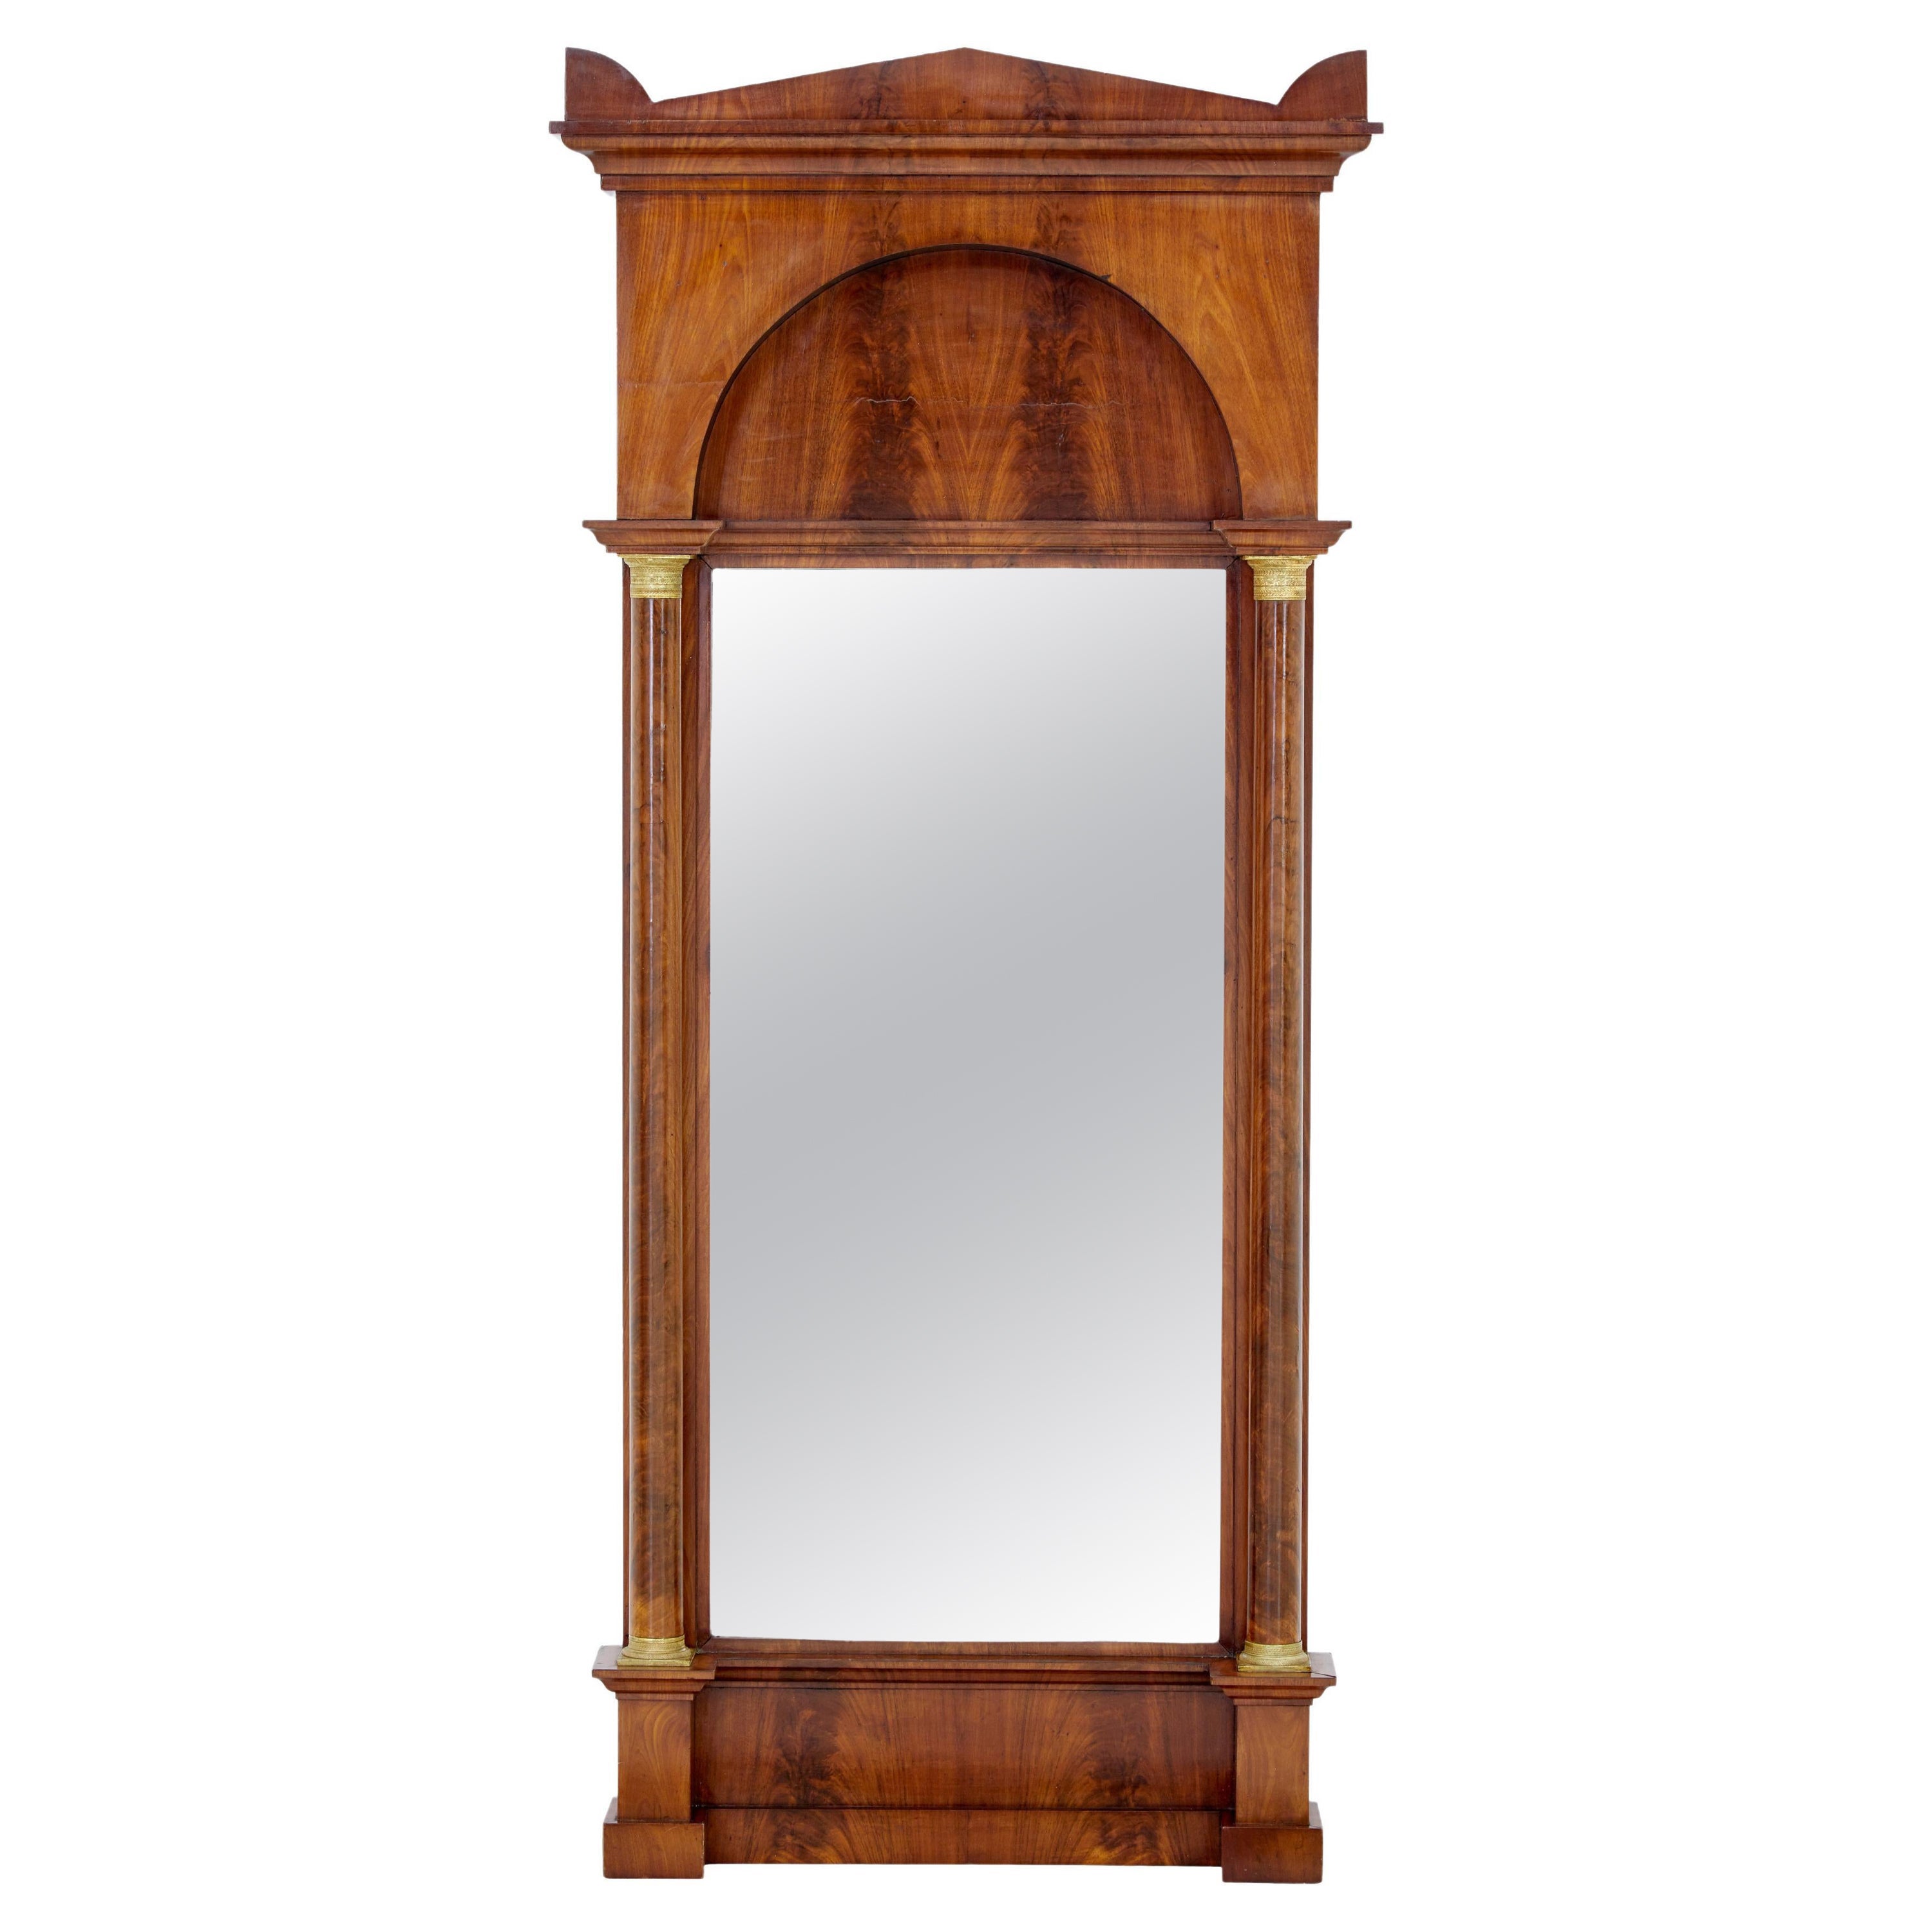 19th Century empire revival mahogany pier mirror For Sale